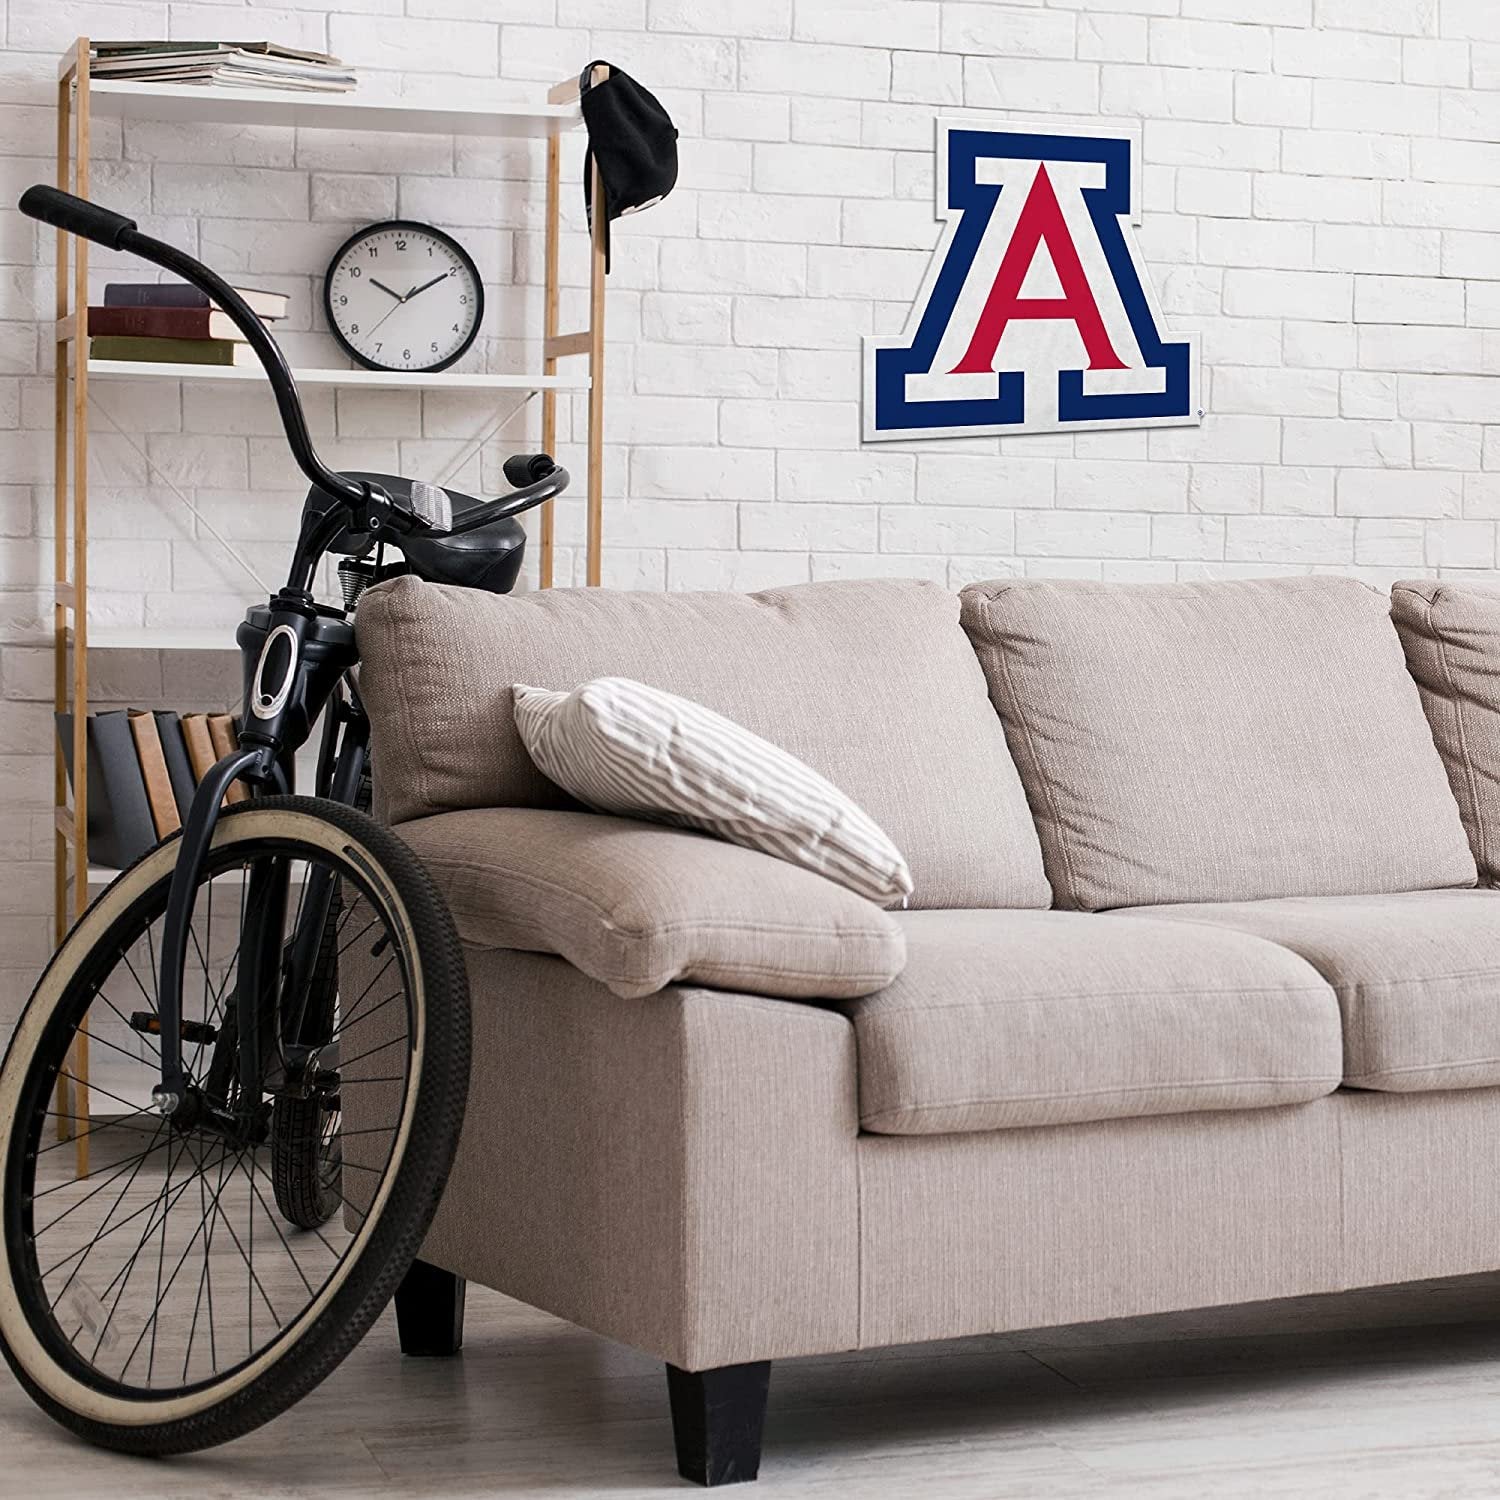 University of Arizona Wildcats Soft Felt Pennant, Logo Design, Shape Cut, 18 Inch, Easy To Hang